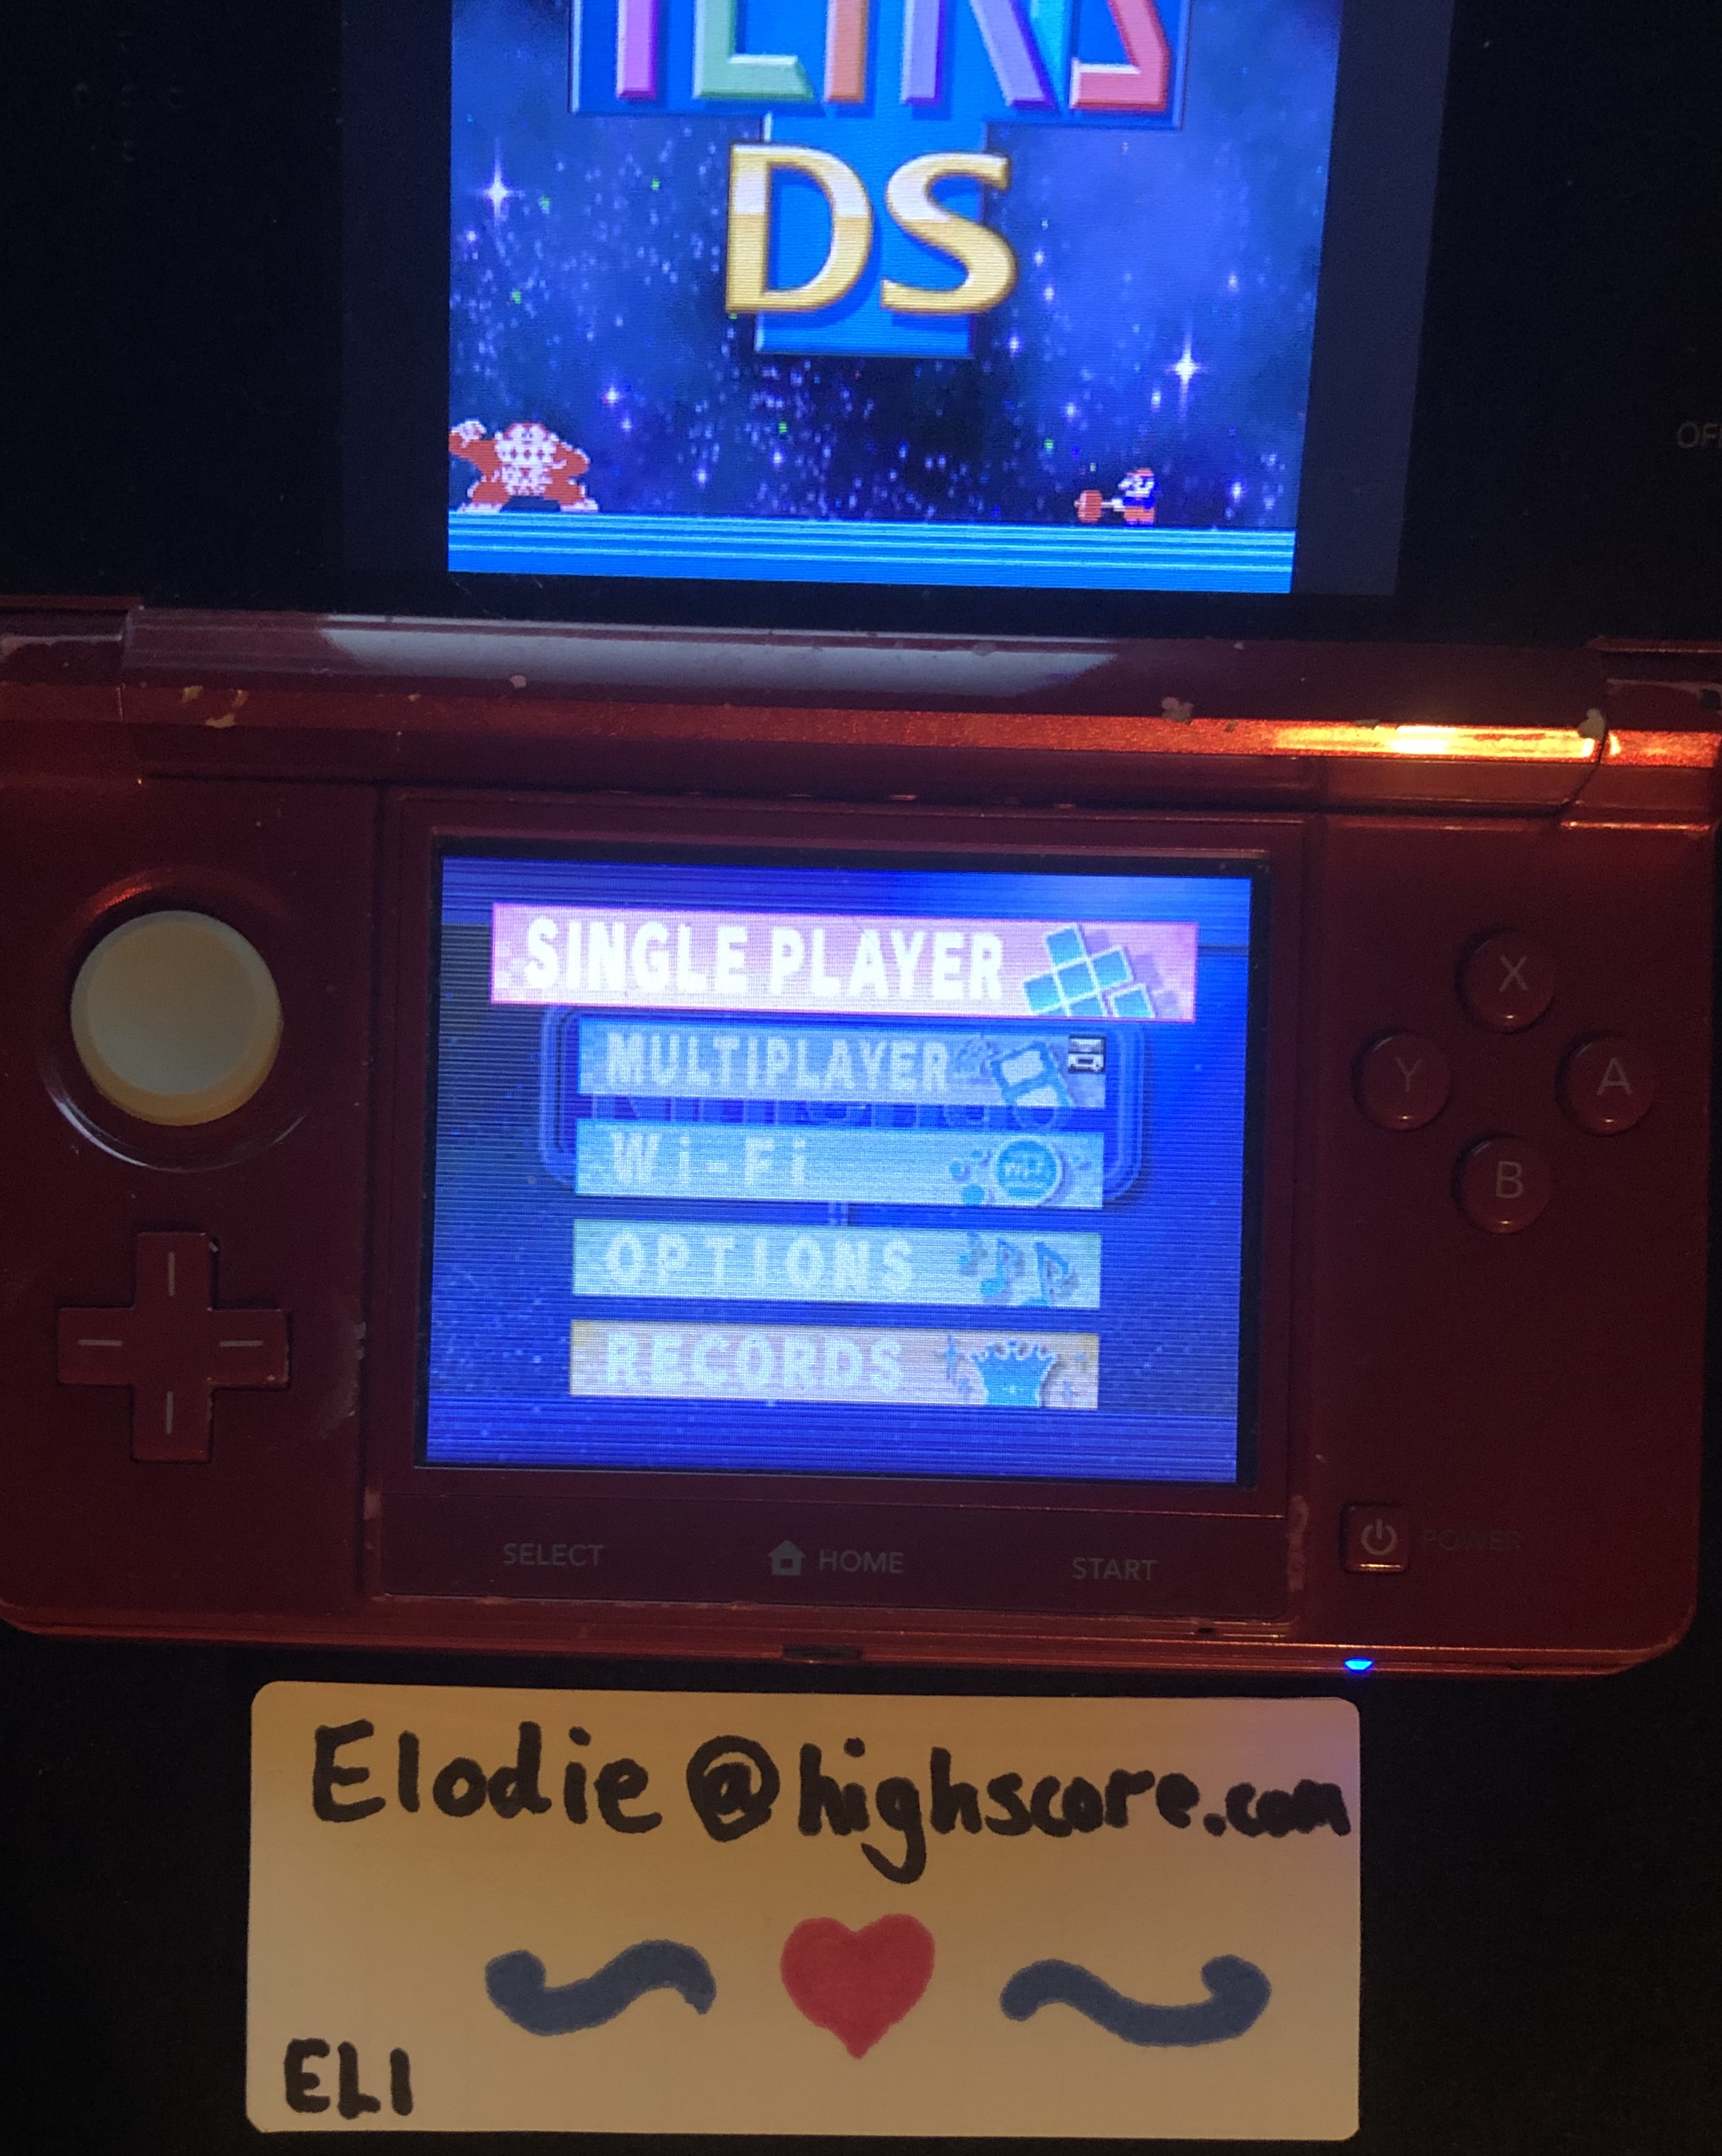 Elodie: Tetris DS Standard/Marathon [Endless On] (Nintendo DS) 26,075,773 points on 2020-02-13 20:55:26